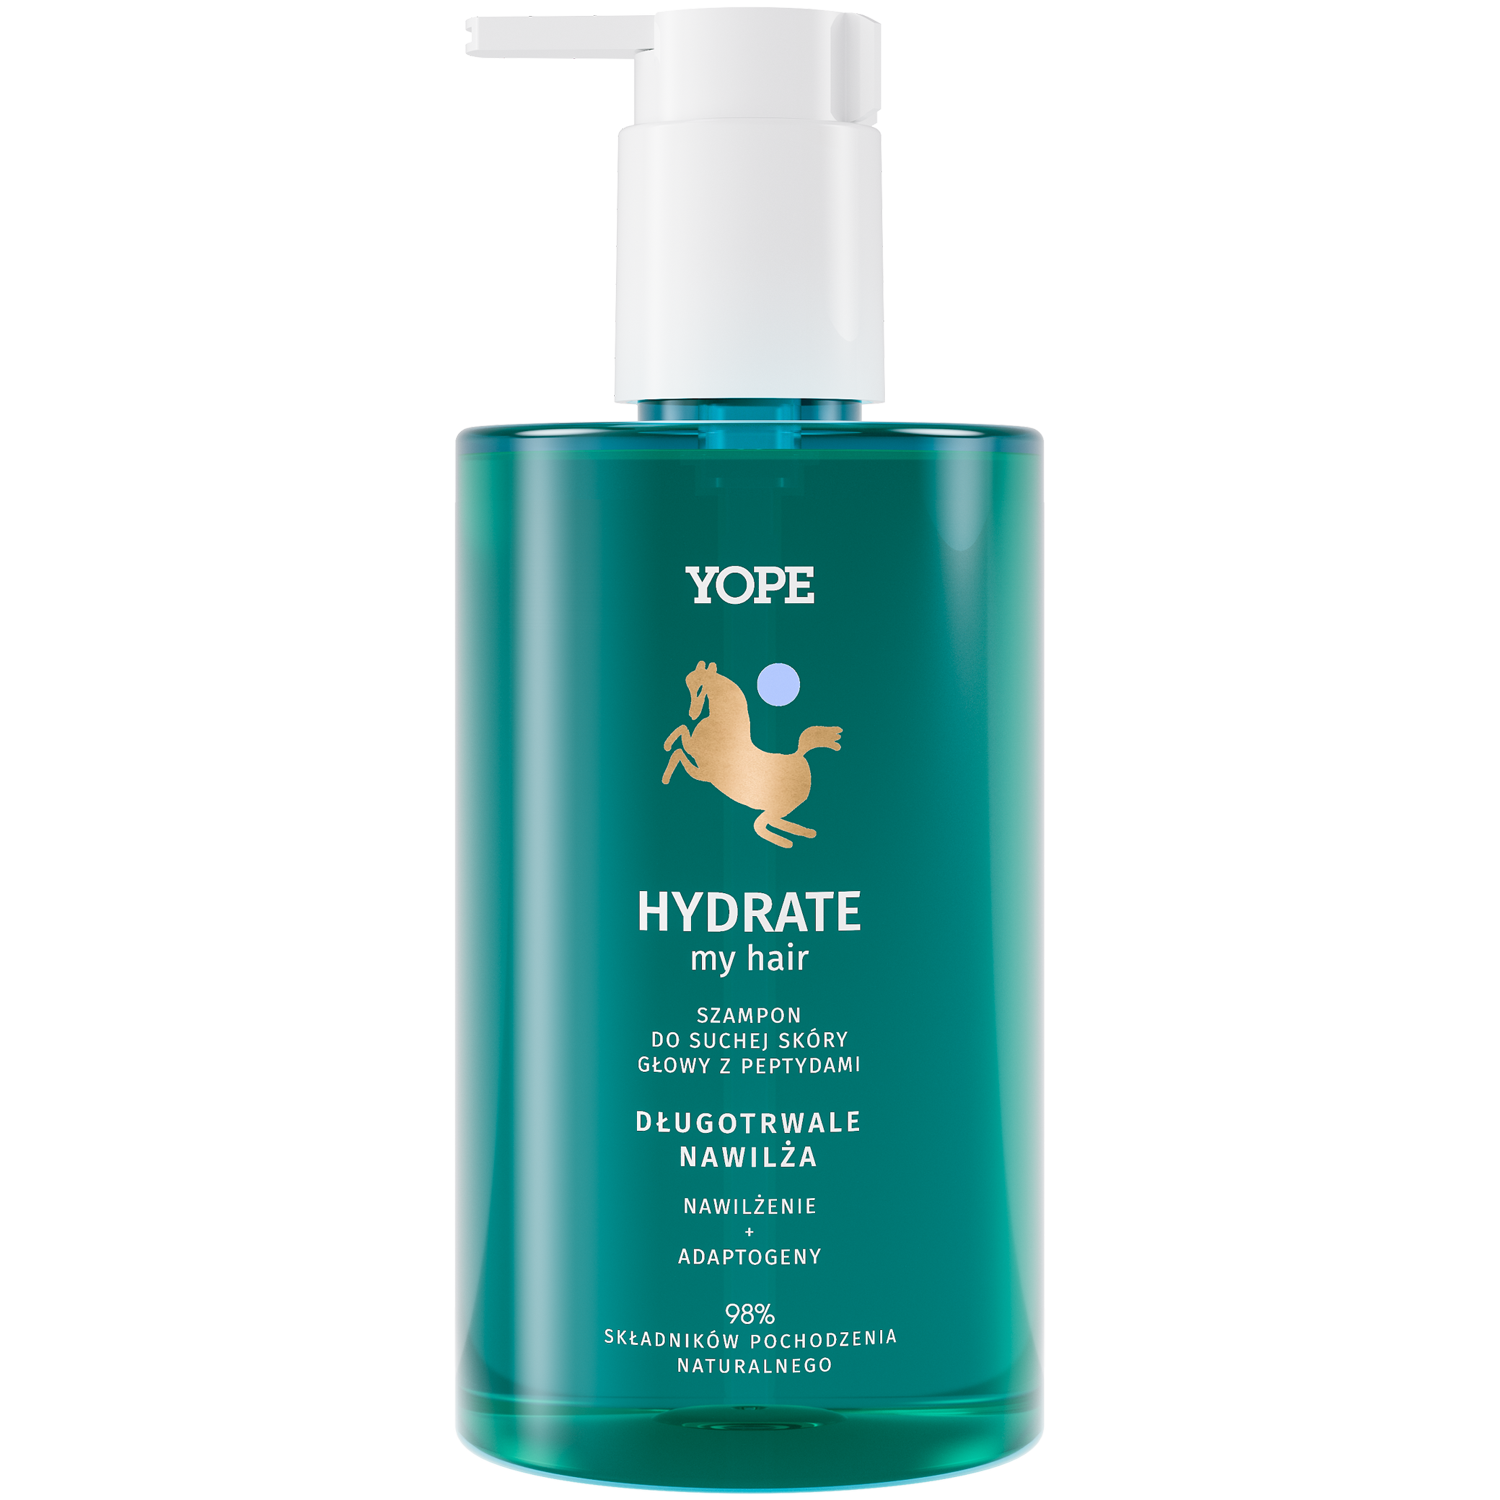 Yope Hydrate My Hair увлажняющий шампунь для волос, 300 мл шампунь для волос indola hydrate увлажняющий 300 мл